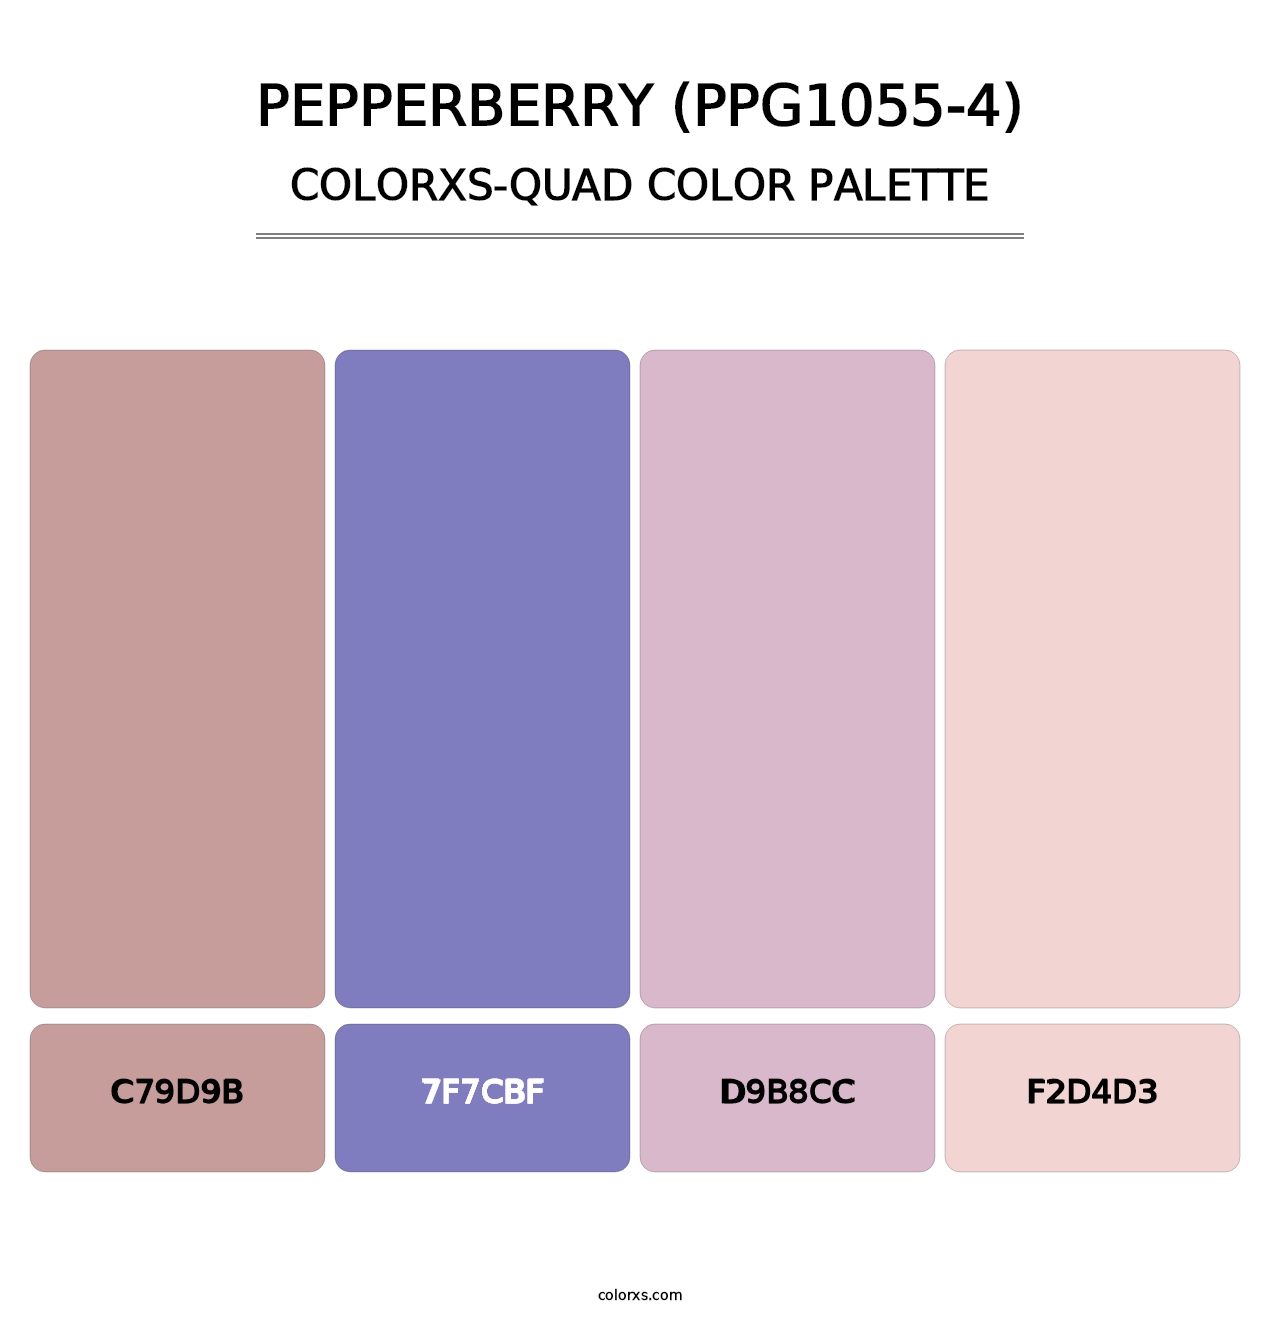 Pepperberry (PPG1055-4) - Colorxs Quad Palette